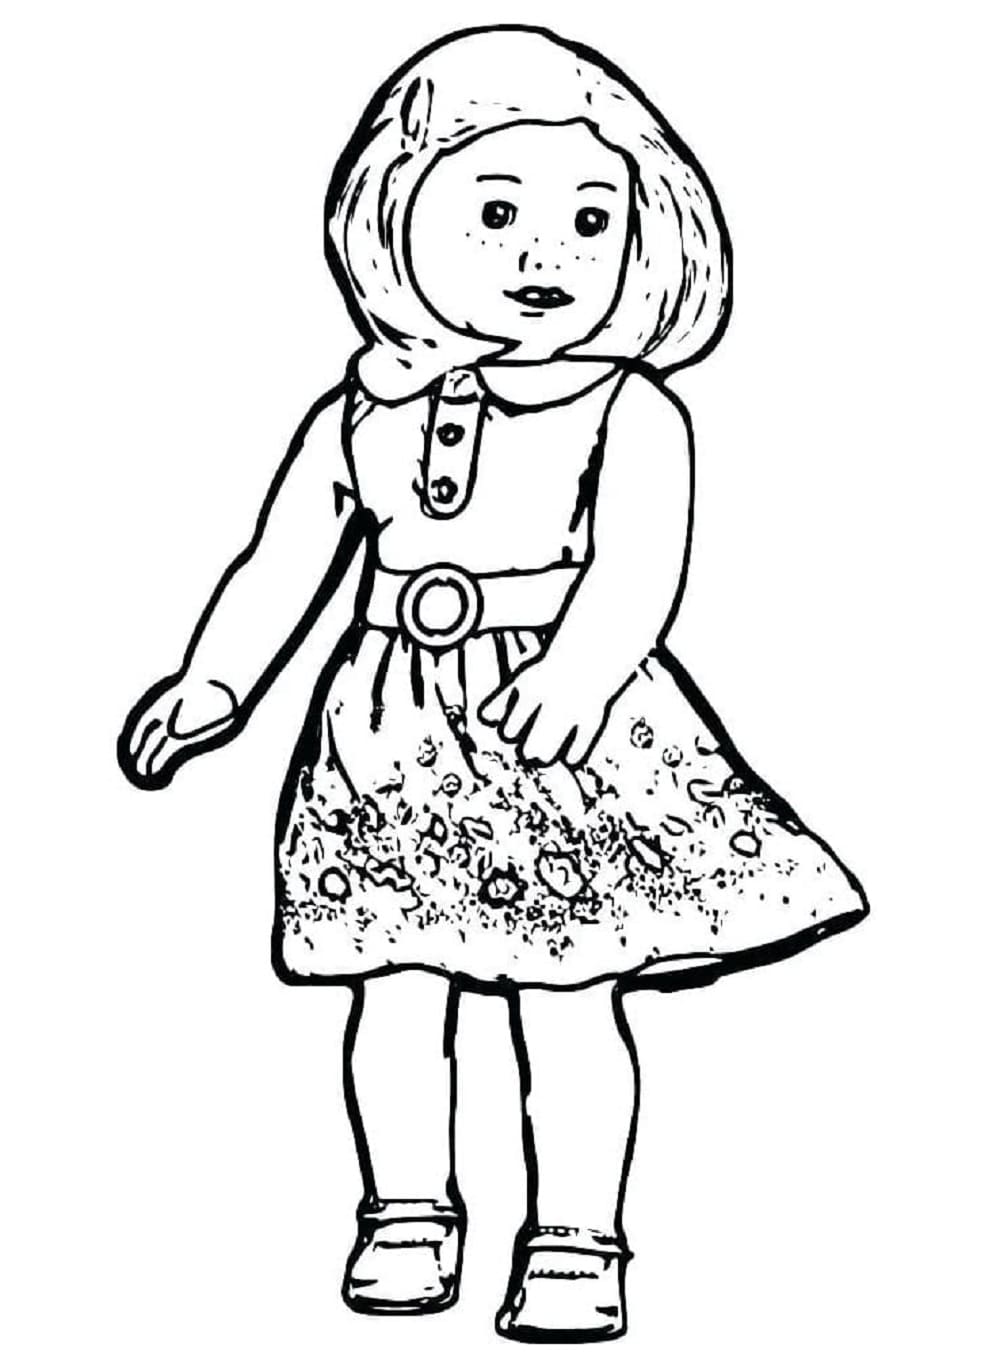 Printable American Girl Image Coloring Page